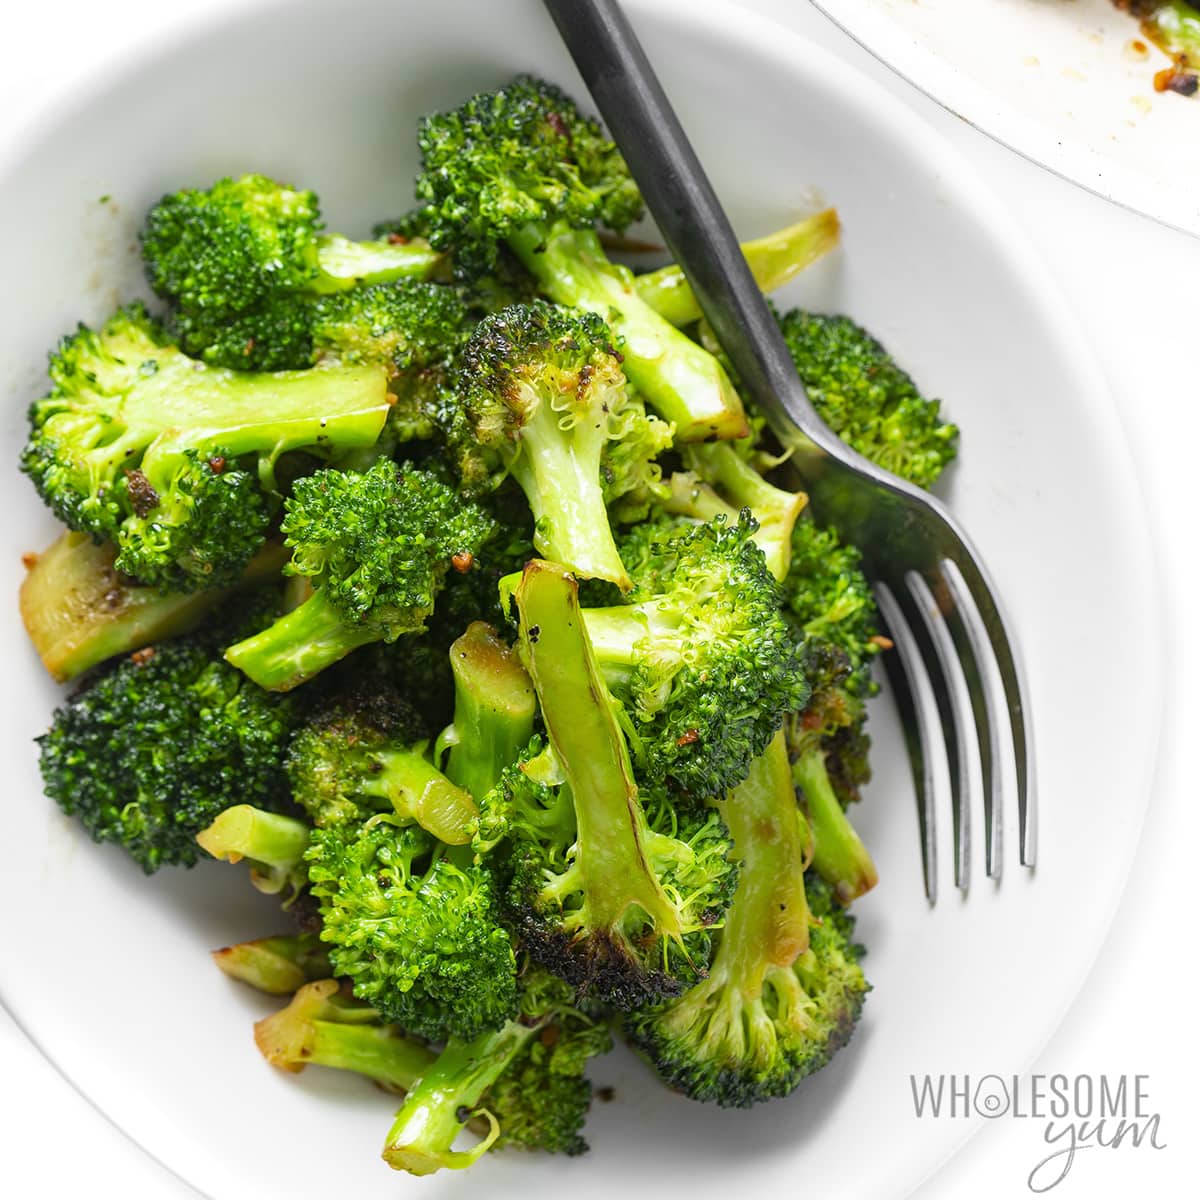 Sauteed broccoli in a bowl.